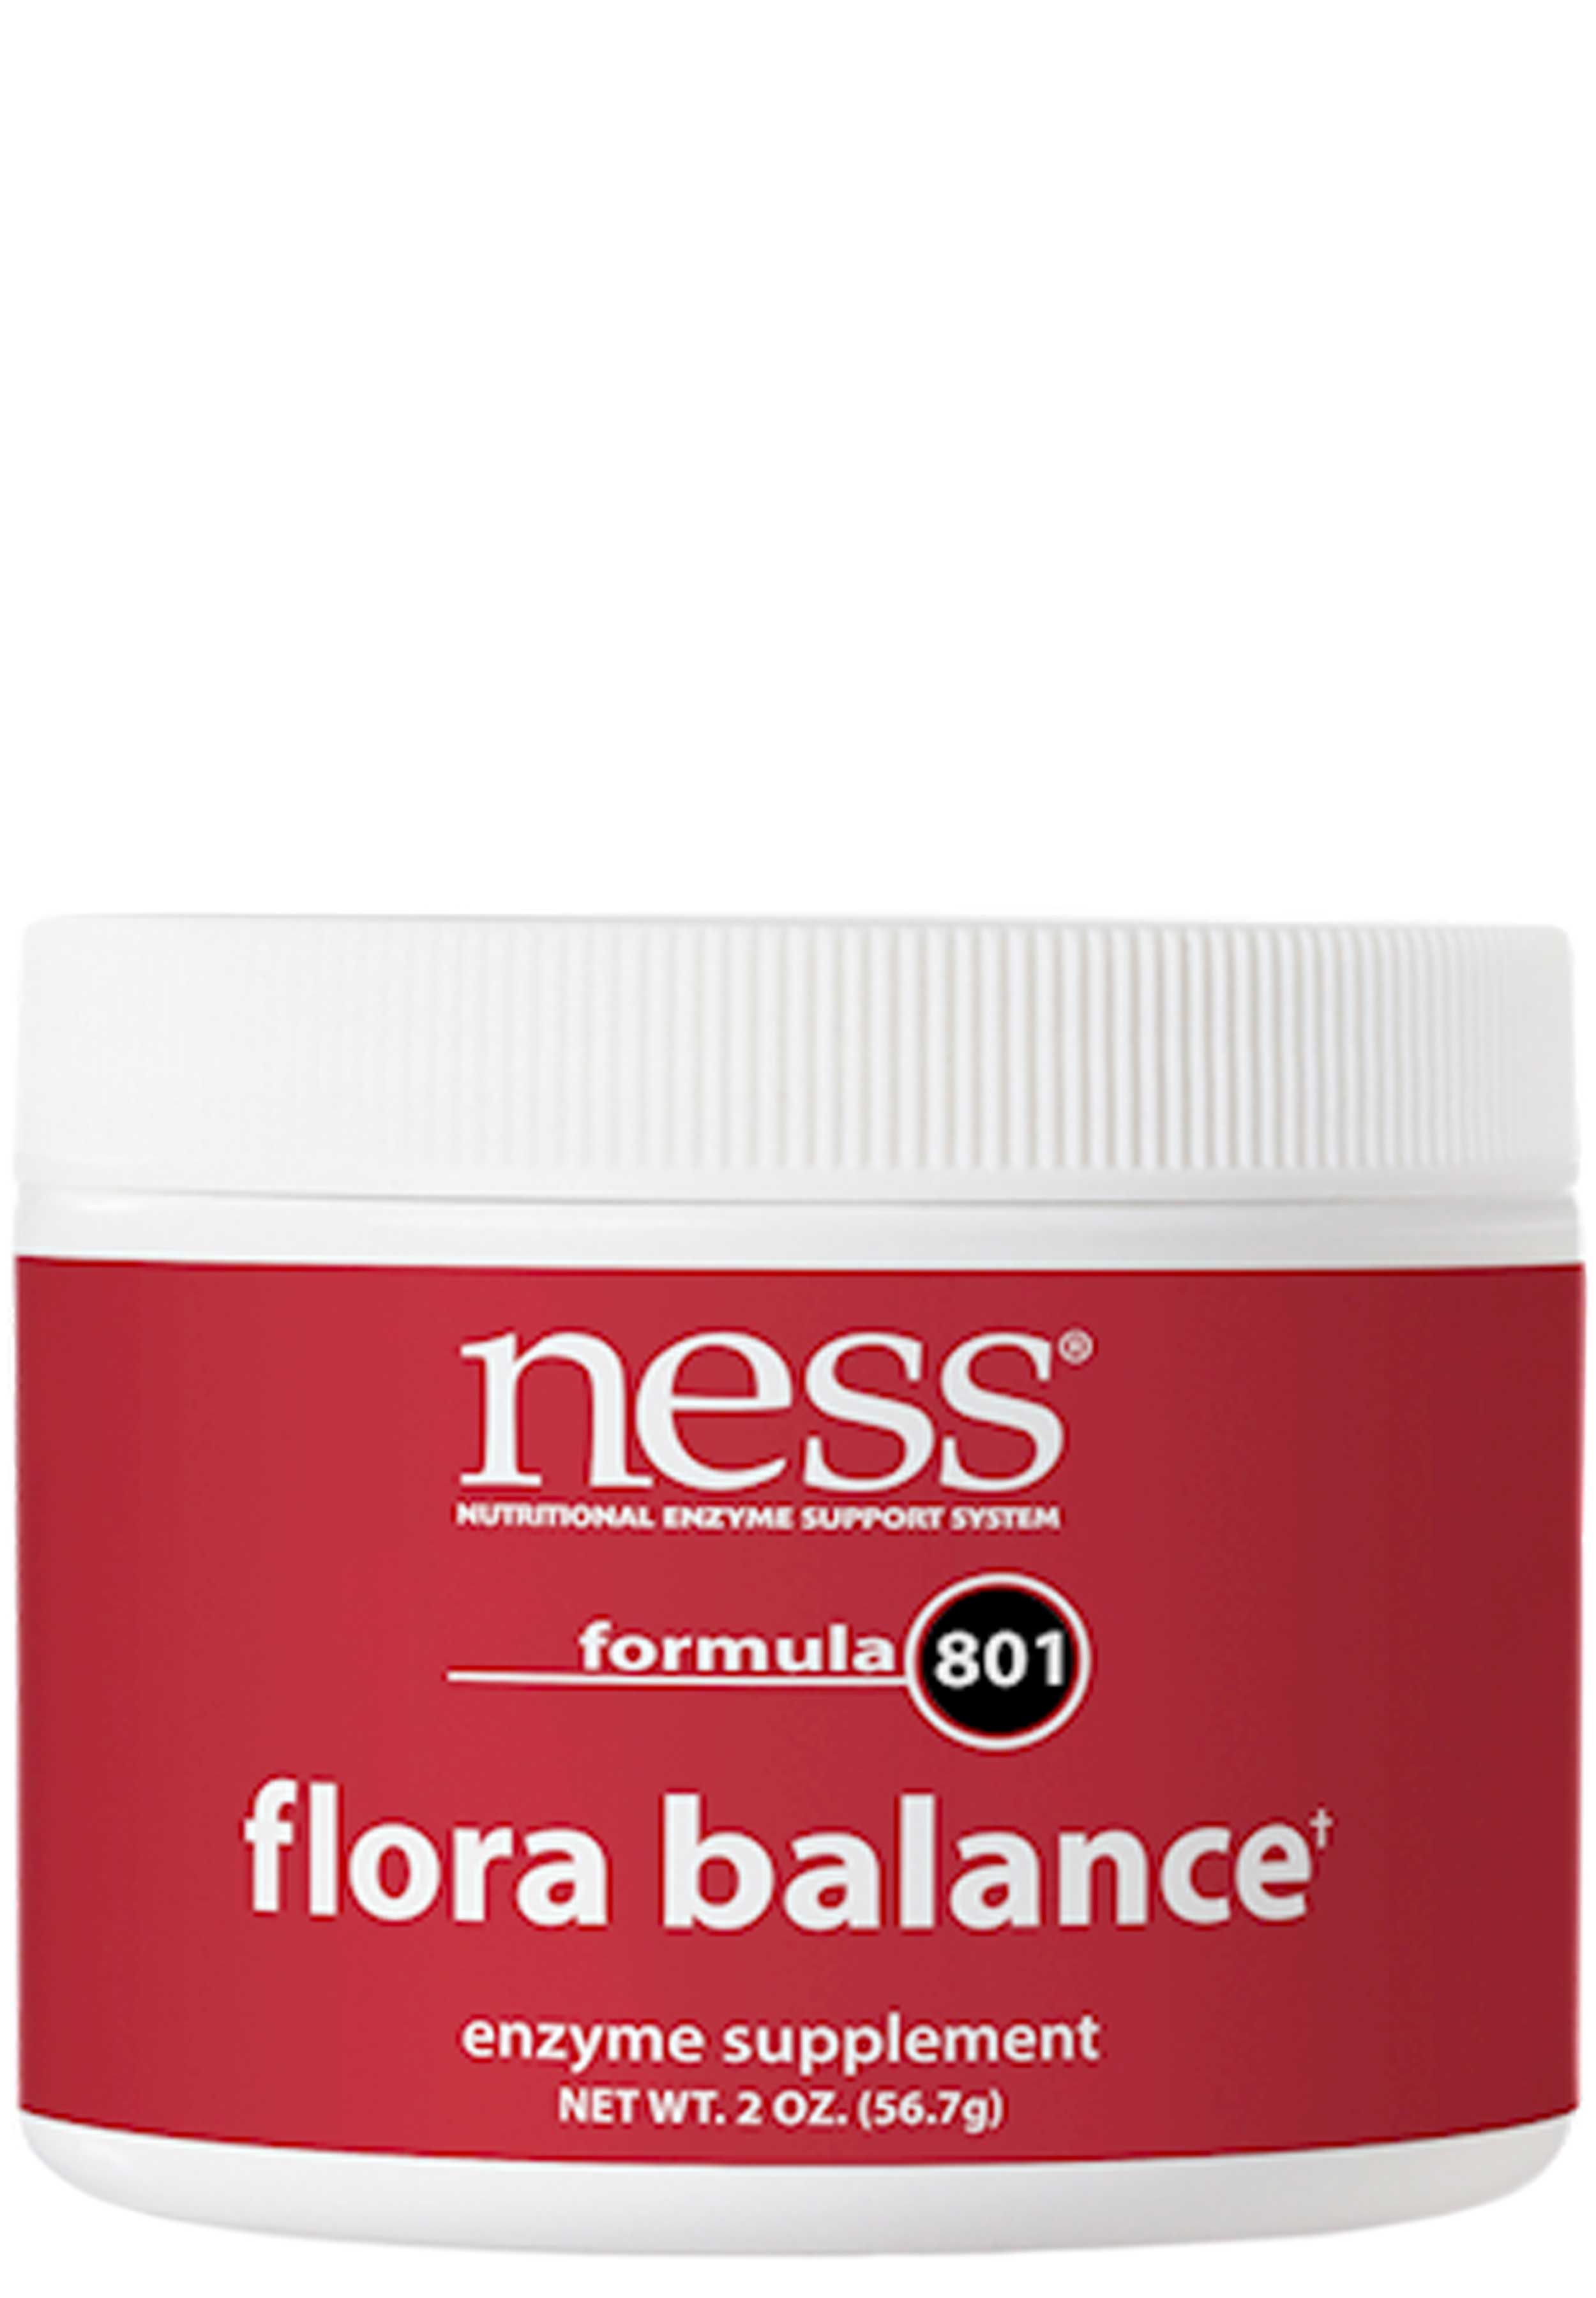 Ness Enzymes Flora Balance Formula #801